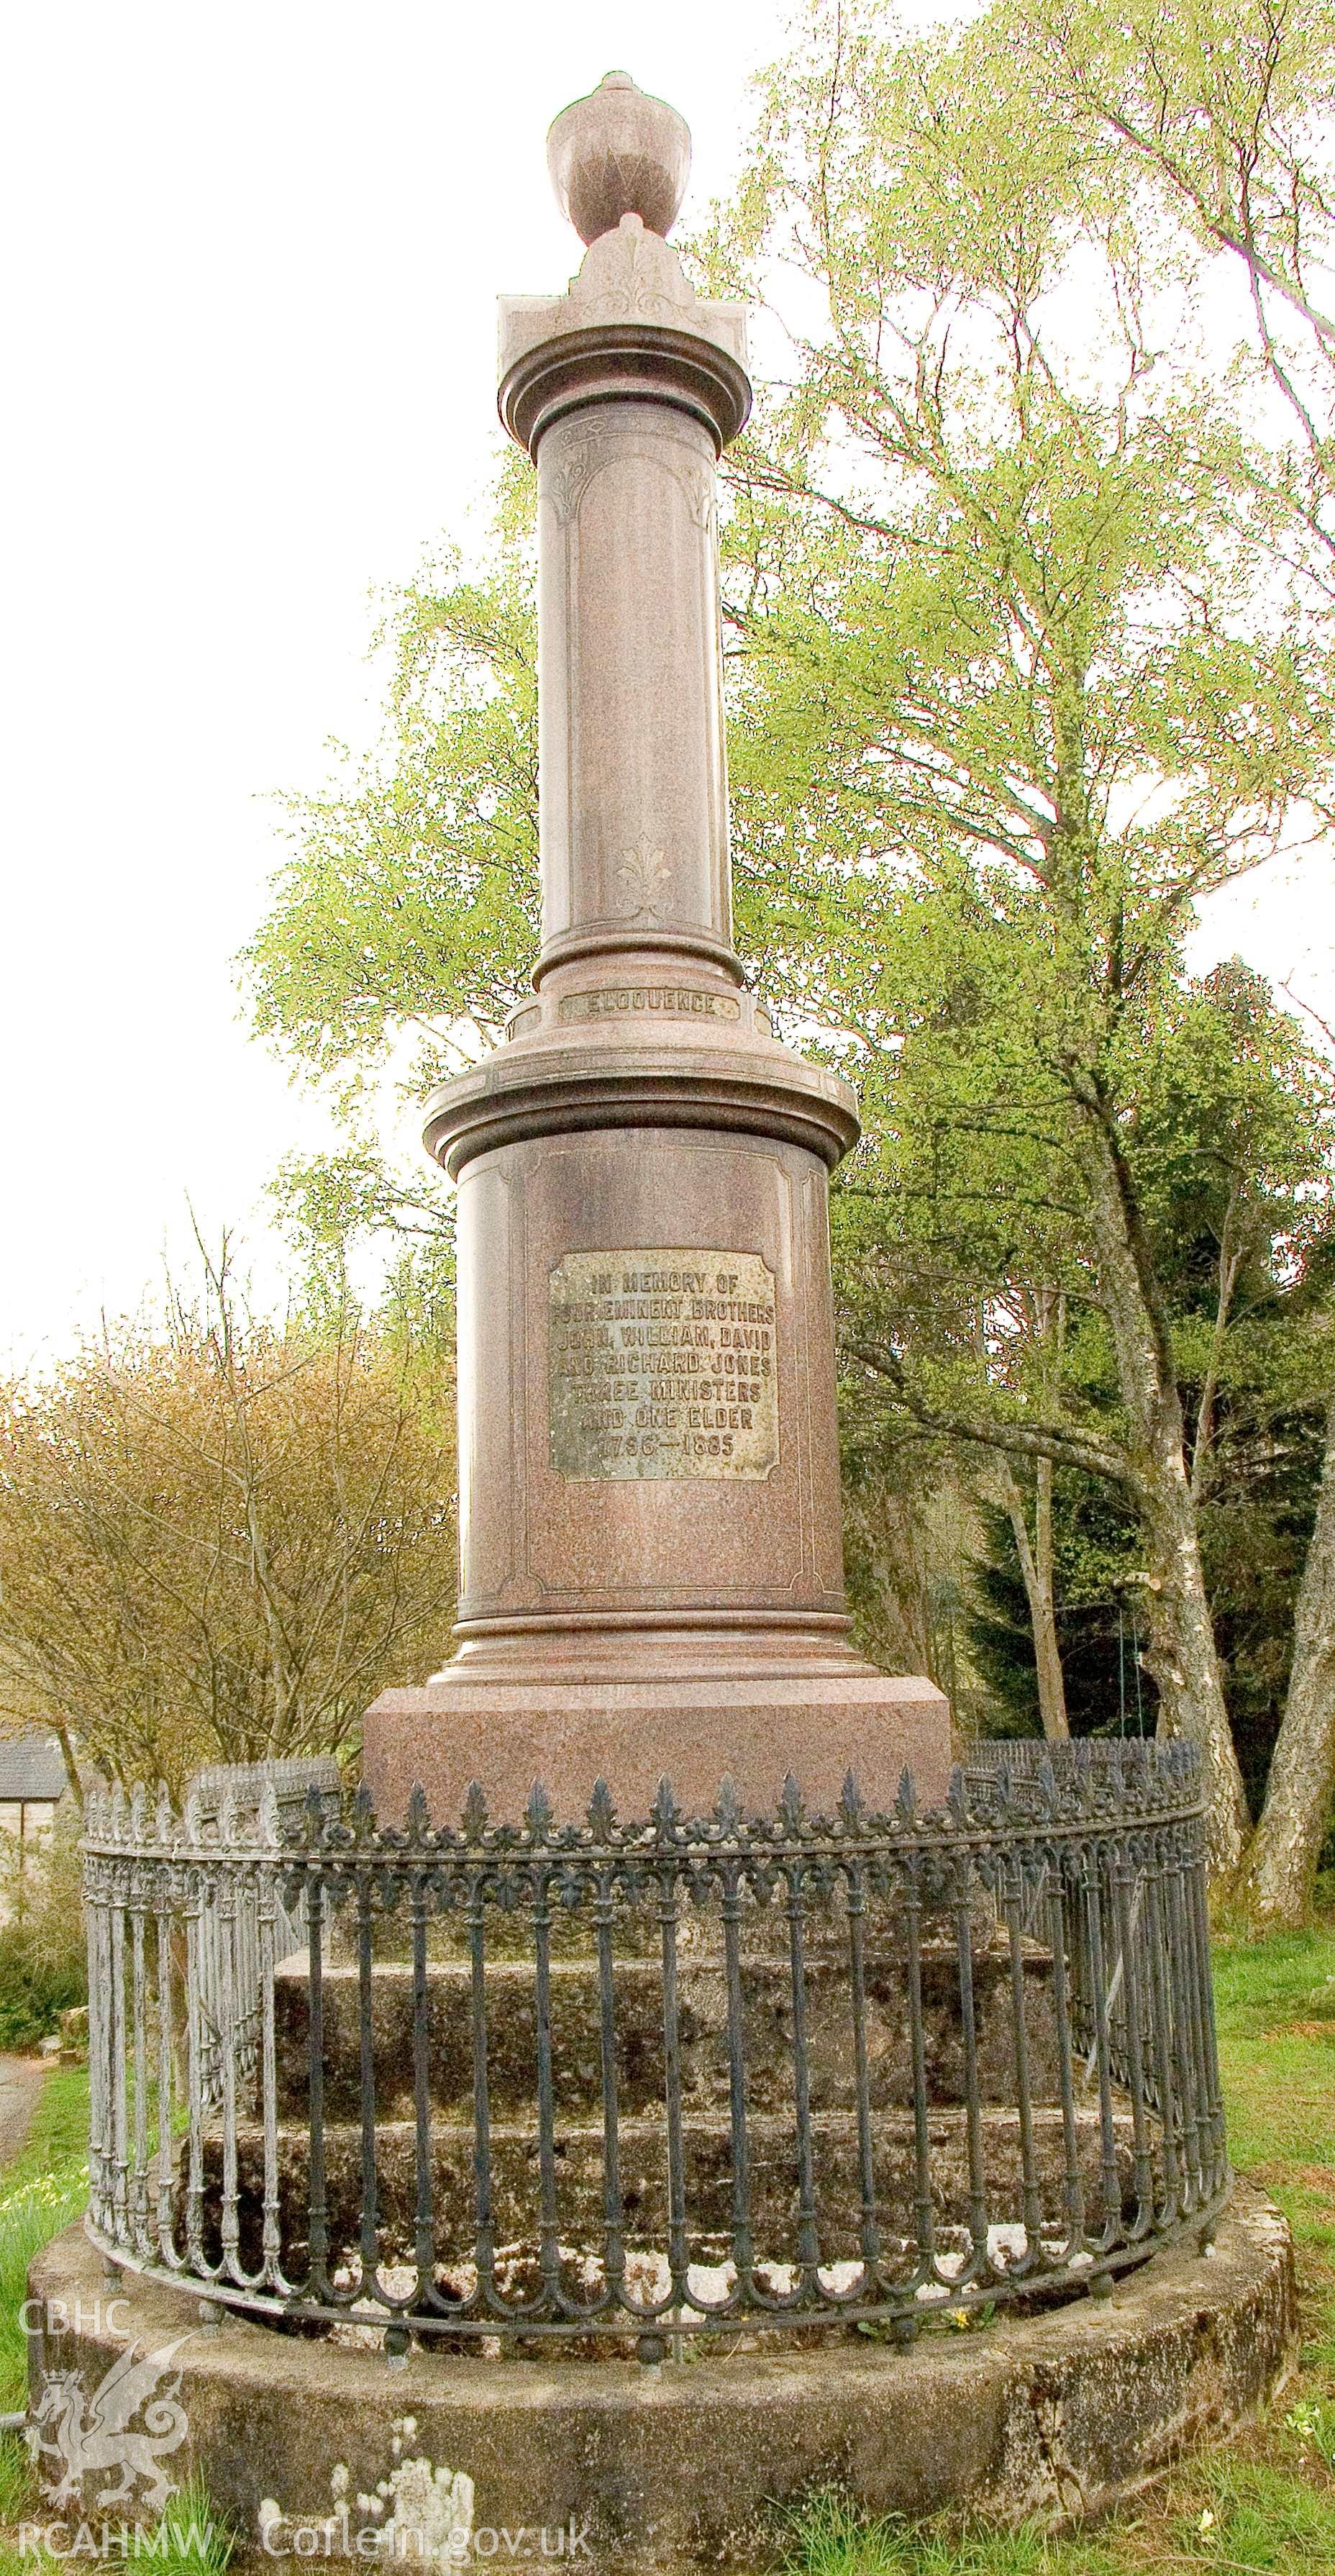 Granite monument at Dolwyddelan taken by David Howarth, undated